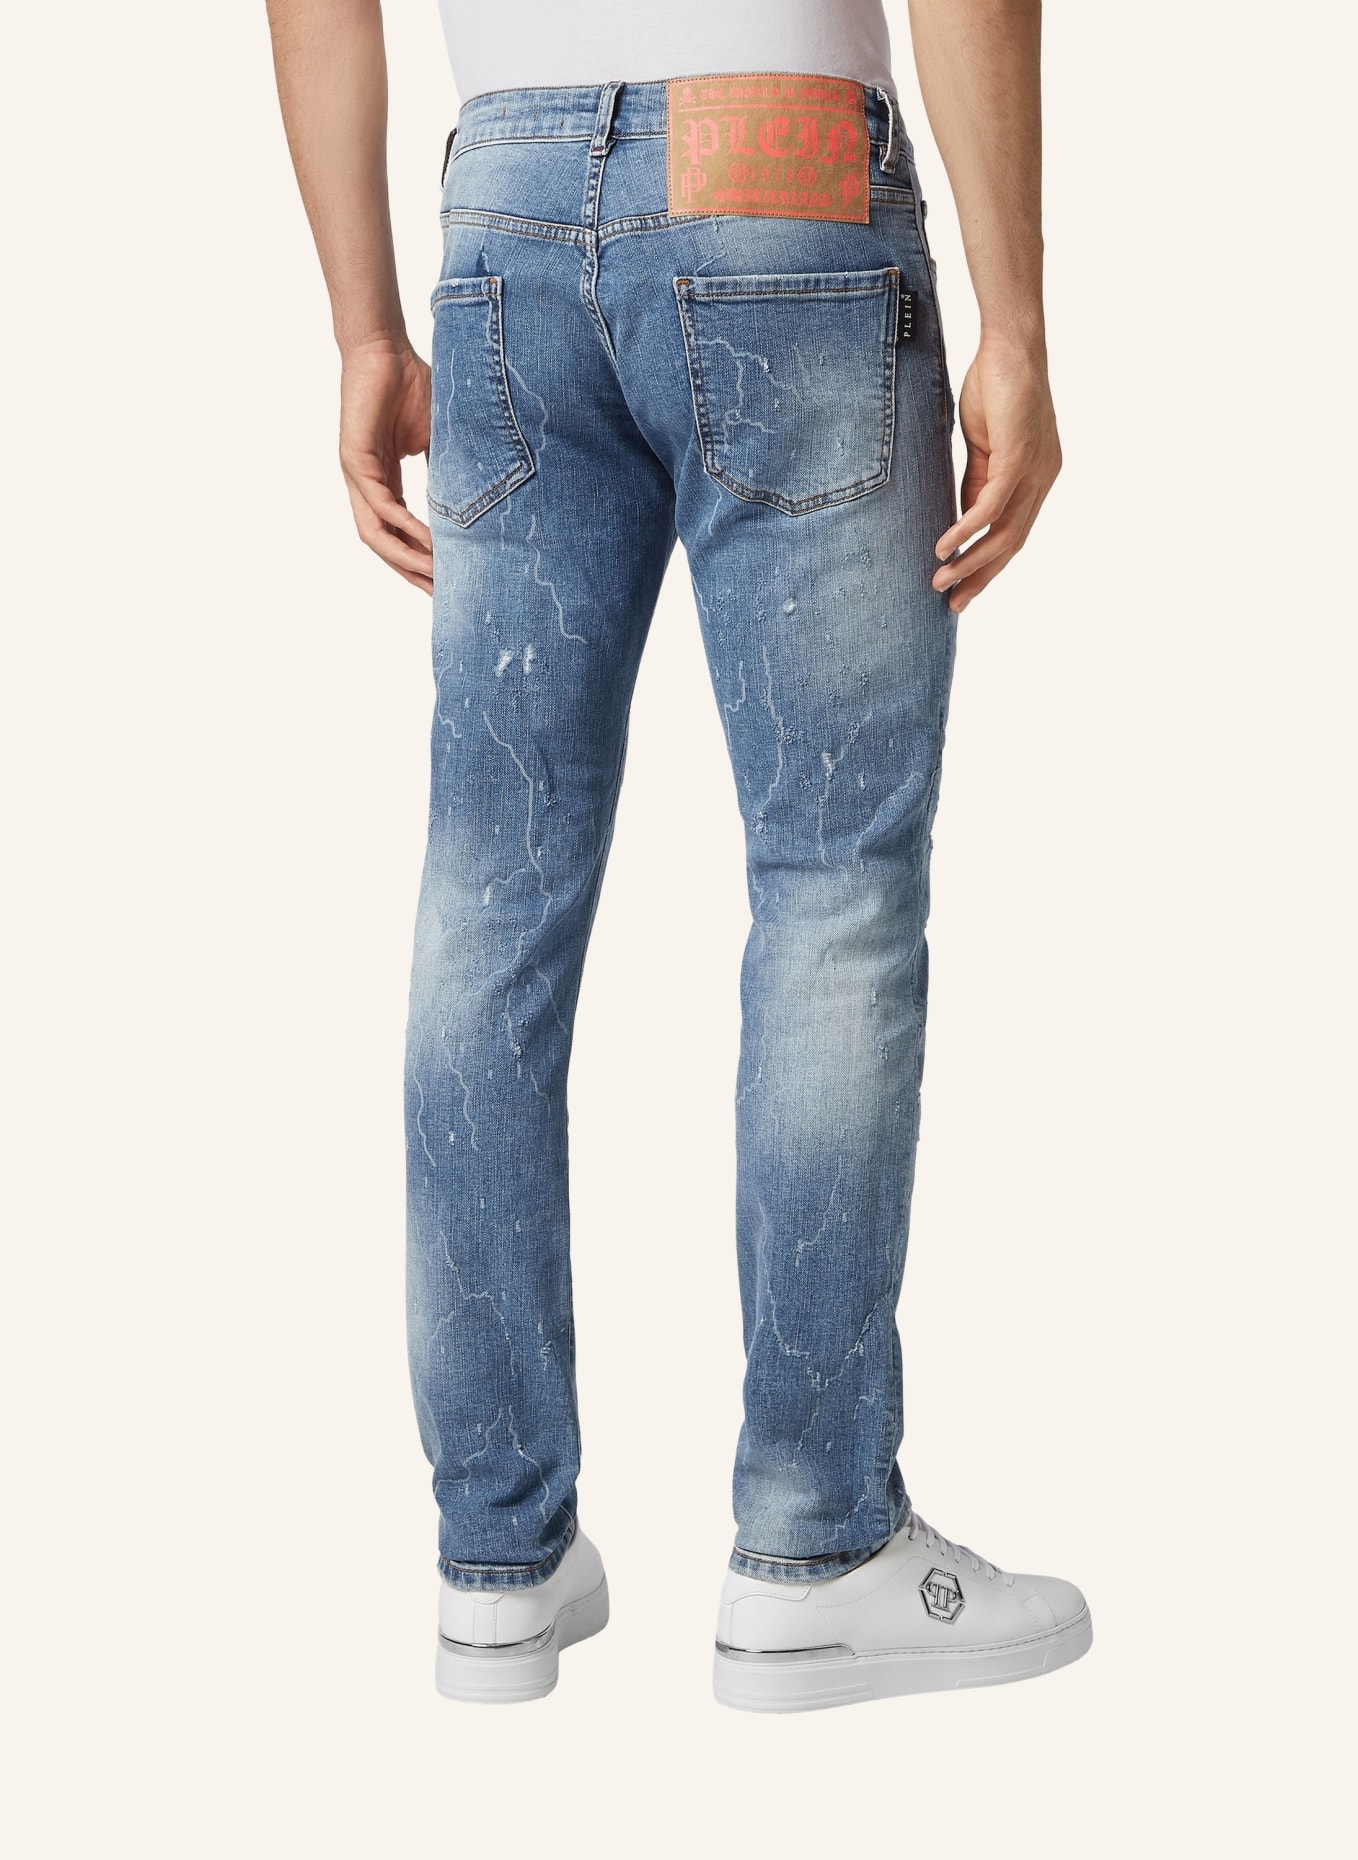 PHILIPP PLEIN Jeans SKULL & BONES Super Straight Fit (Bild 2)